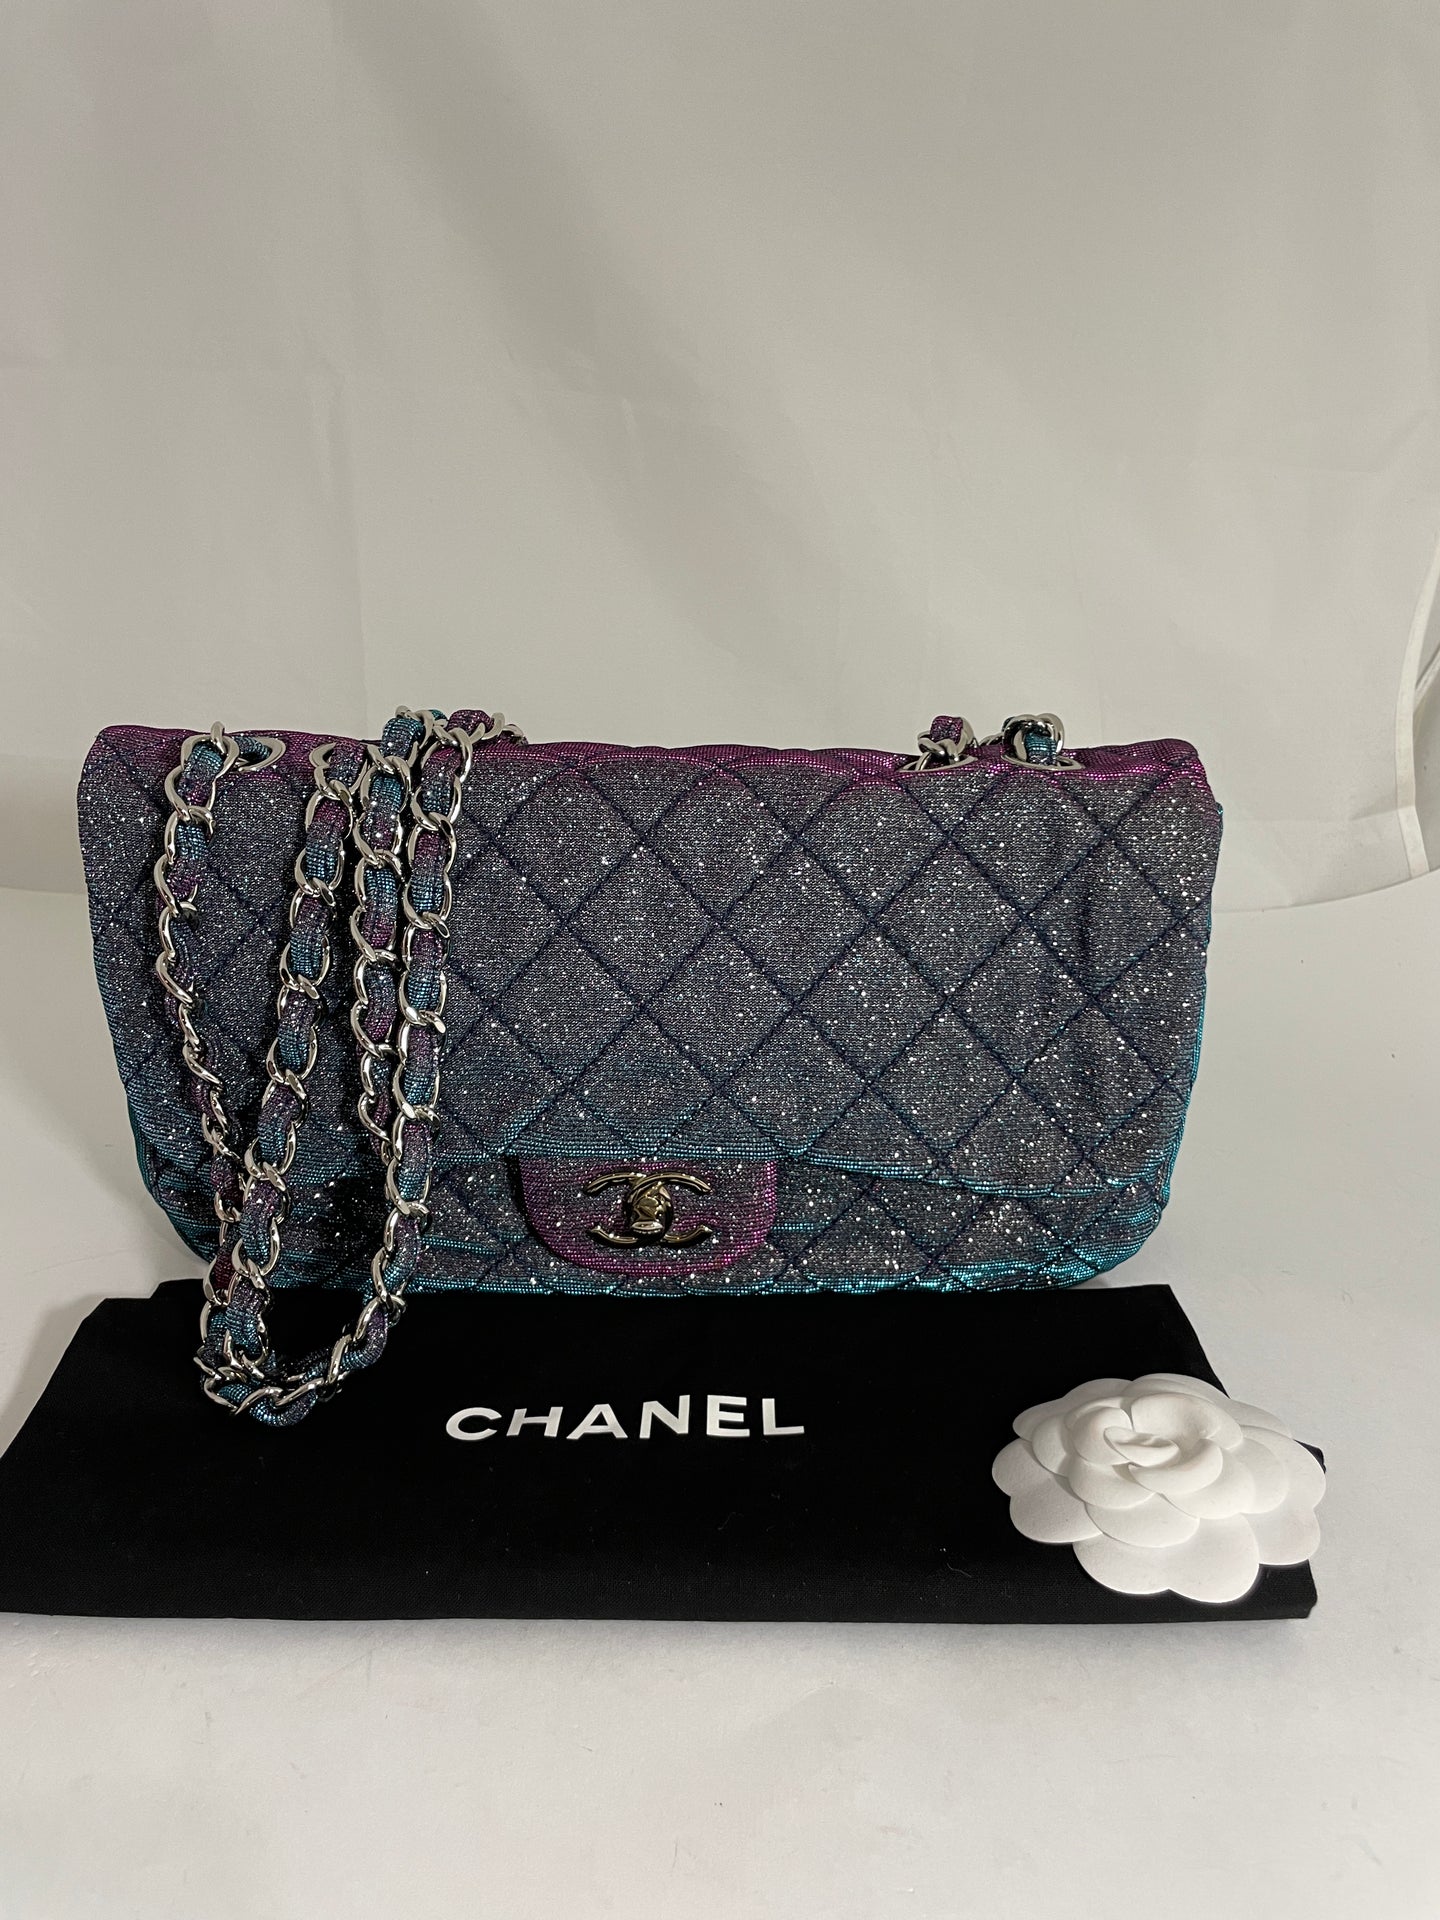 Chanel Iridescent Glitter Jumbo Crossbody Bag